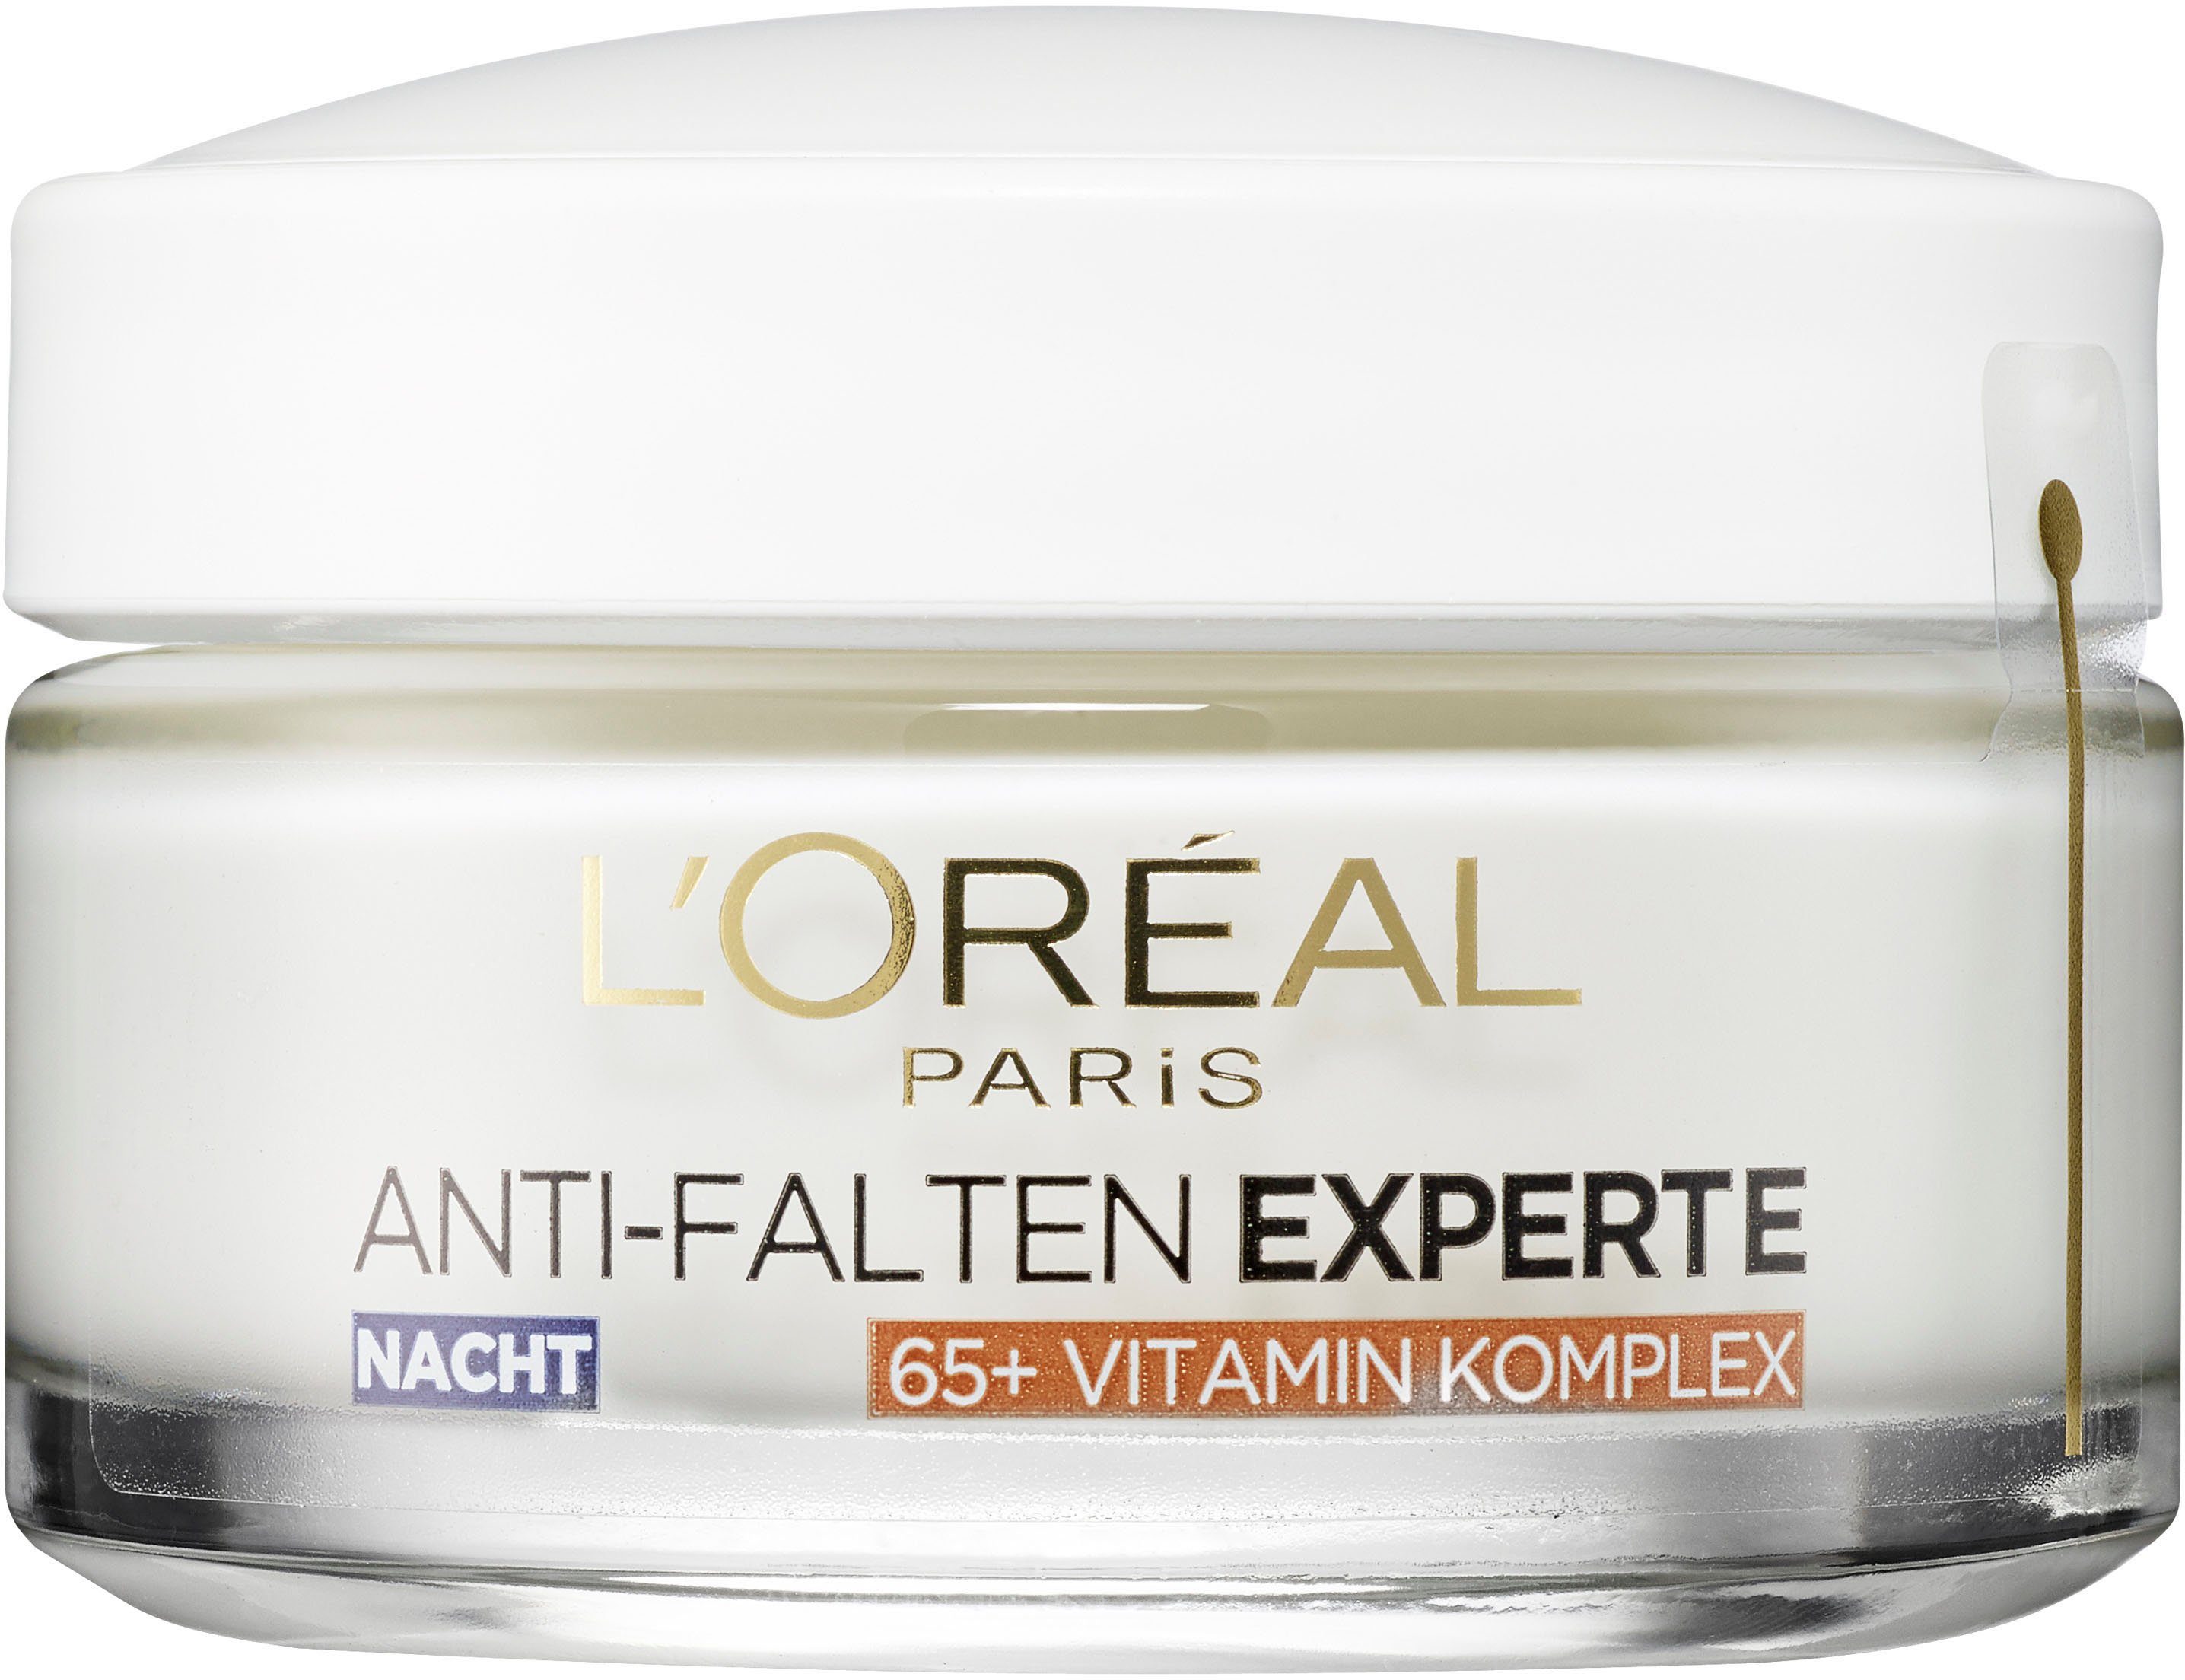 L'ORÉAL PARIS Anti-Aging-Creme Anti-Falten Experte für Feuchtigkeitspflege Haut Nacht 65